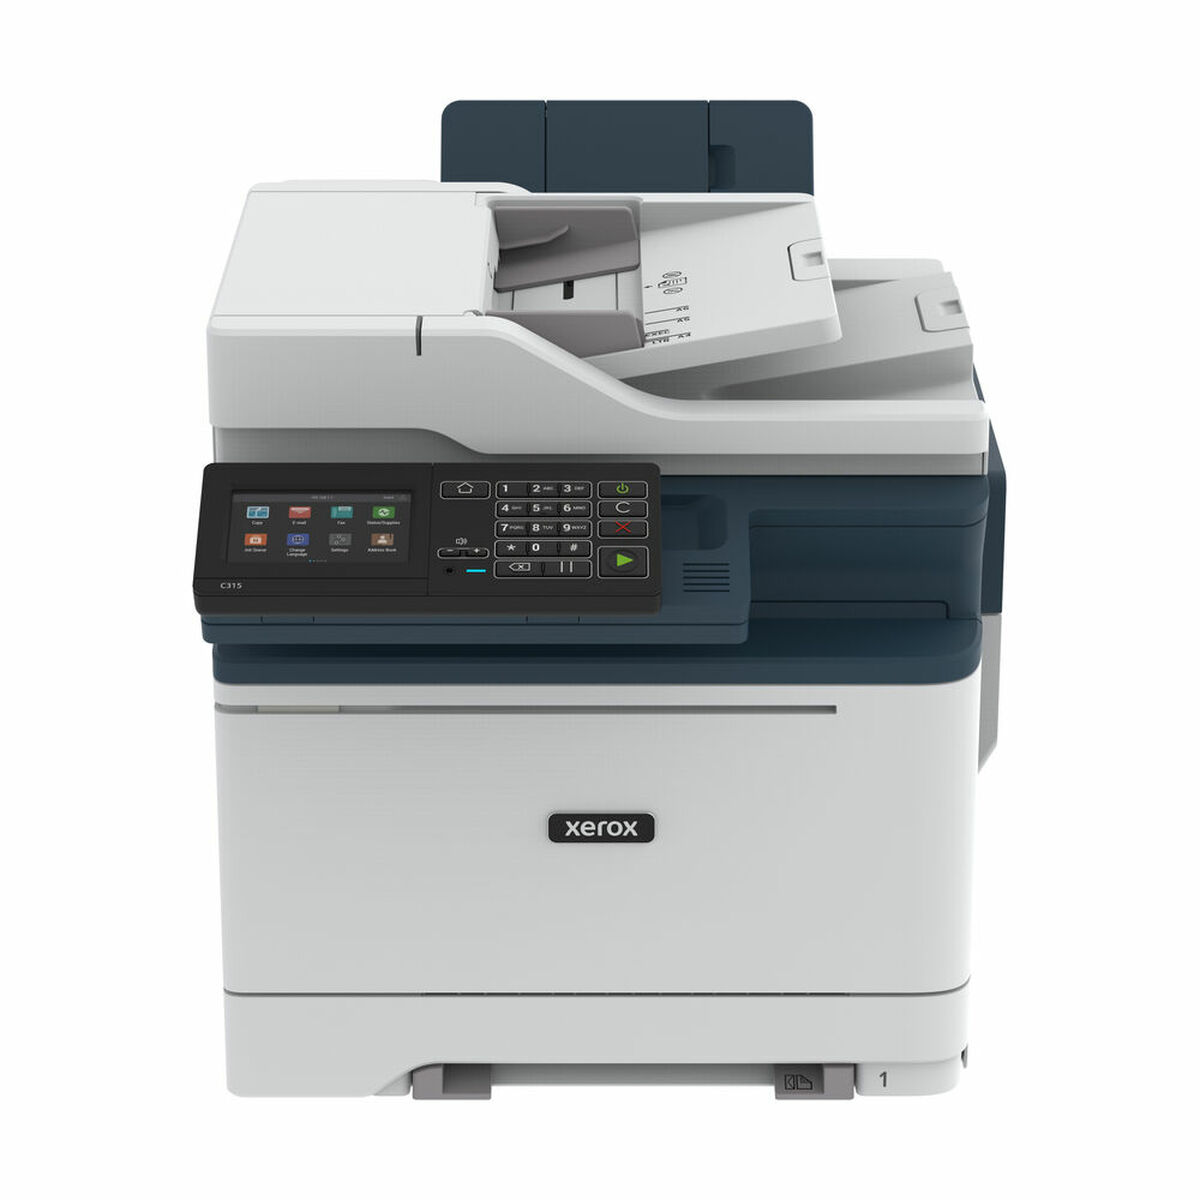 WLAN PRINTER C315 Drucker COLOR XEROX printer_multifunction Xerox und MULTIFUNCTION Laser Drucker Multifunktionsgeräte -